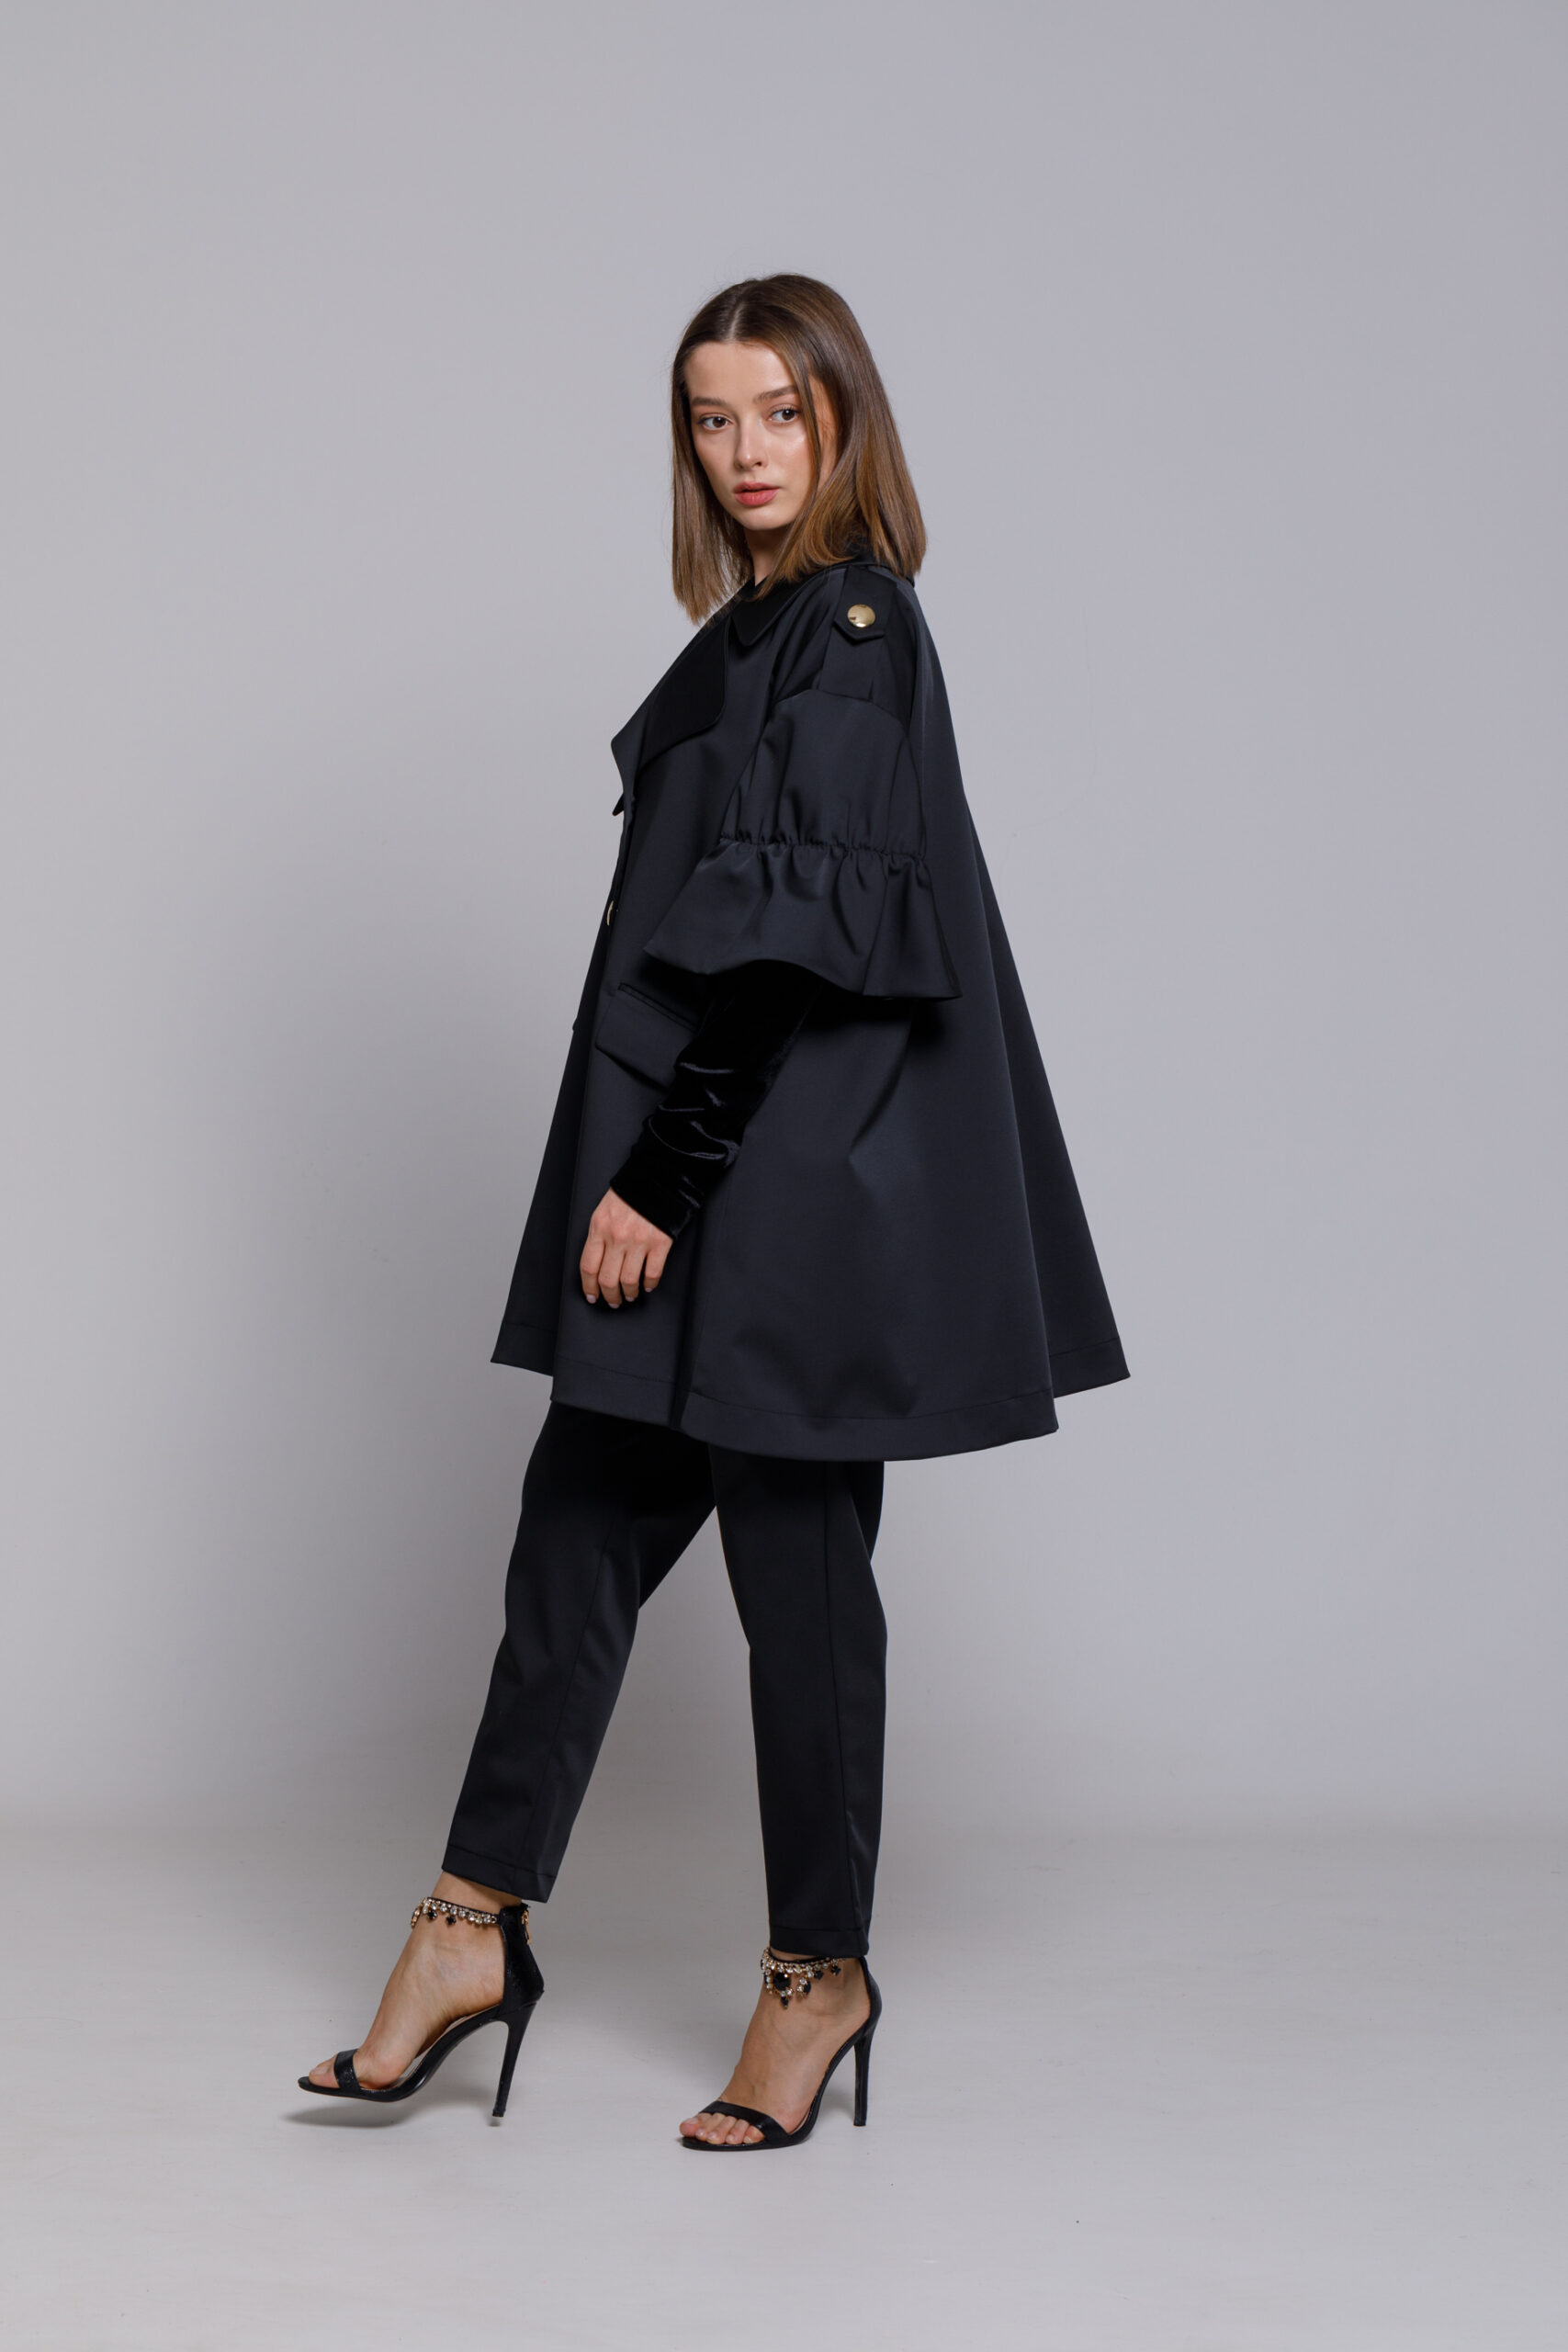 Black CALLIOPE jacket with ruffles on the sleeve. Natural fabrics, original design, handmade embroidery